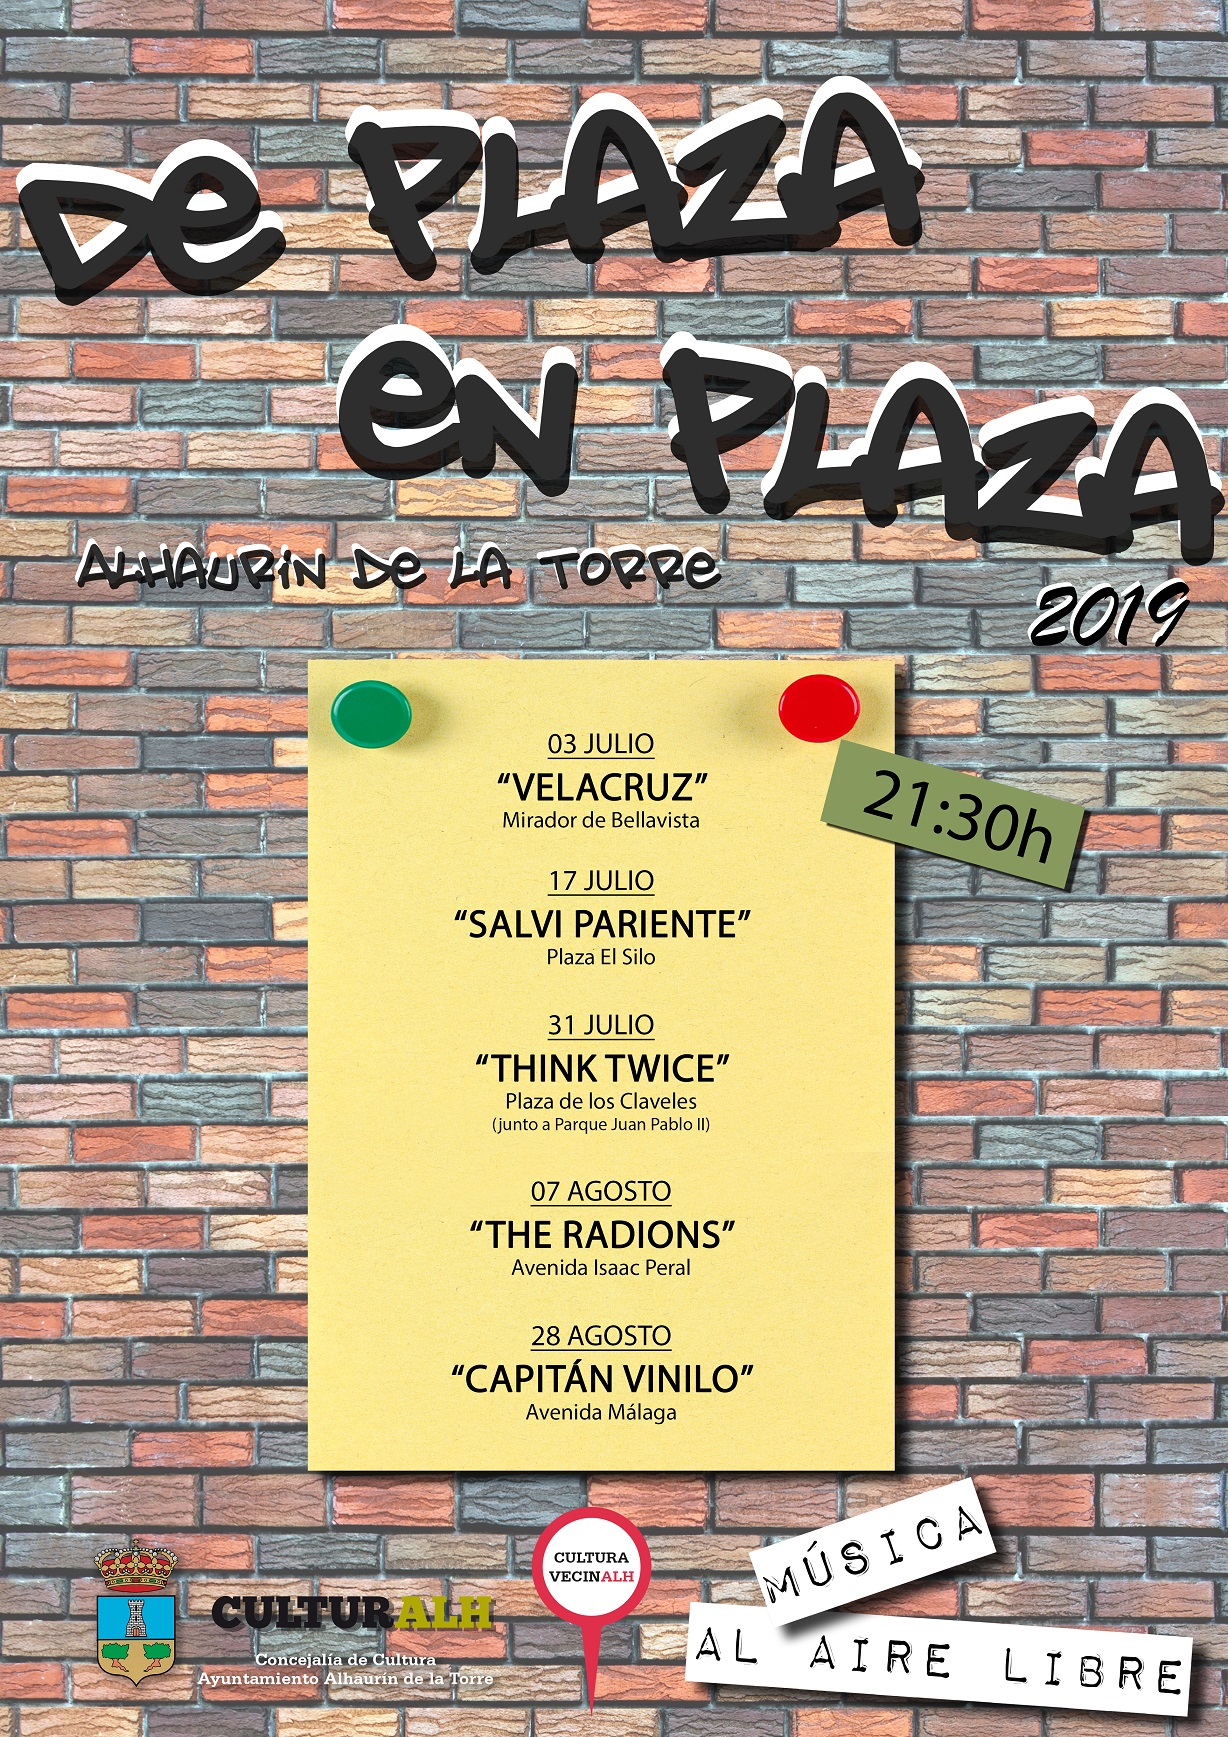 Cartel De plaza en plaza 2019